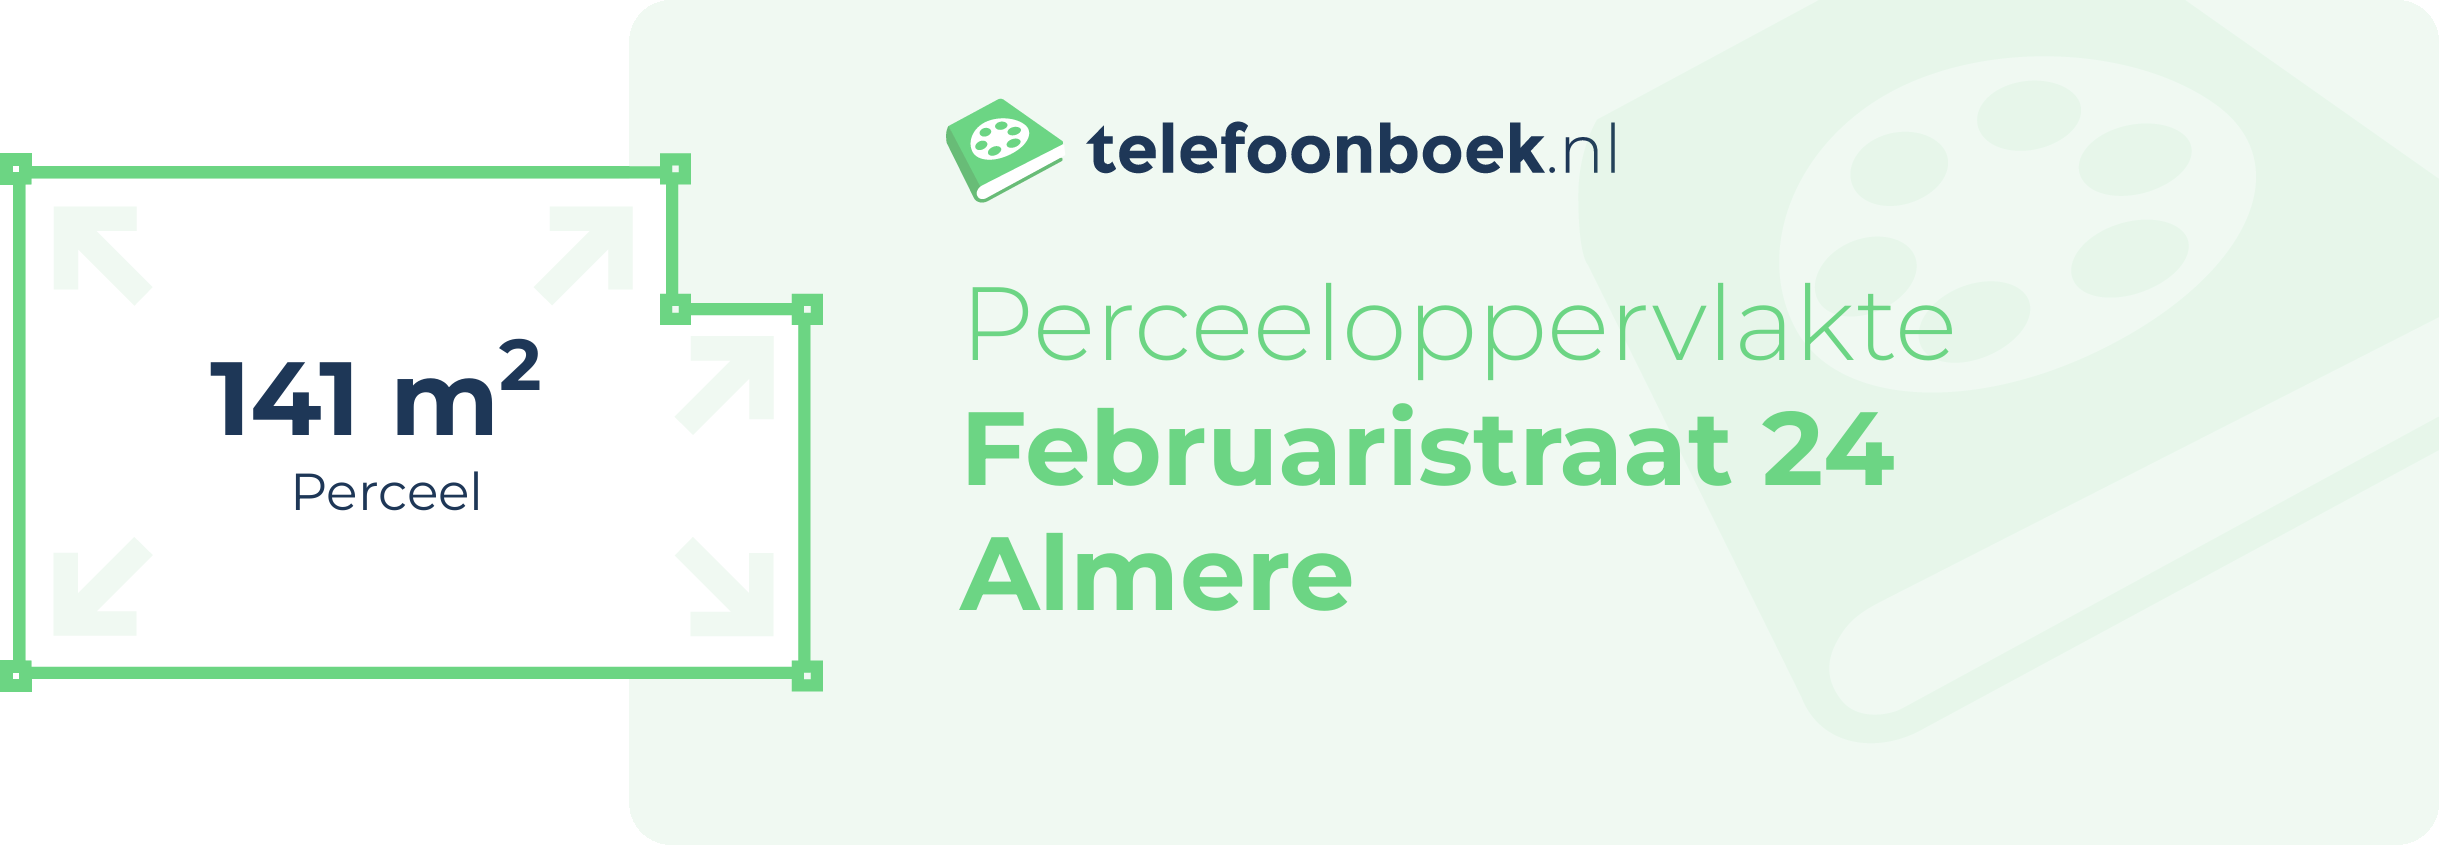 Perceeloppervlakte Februaristraat 24 Almere